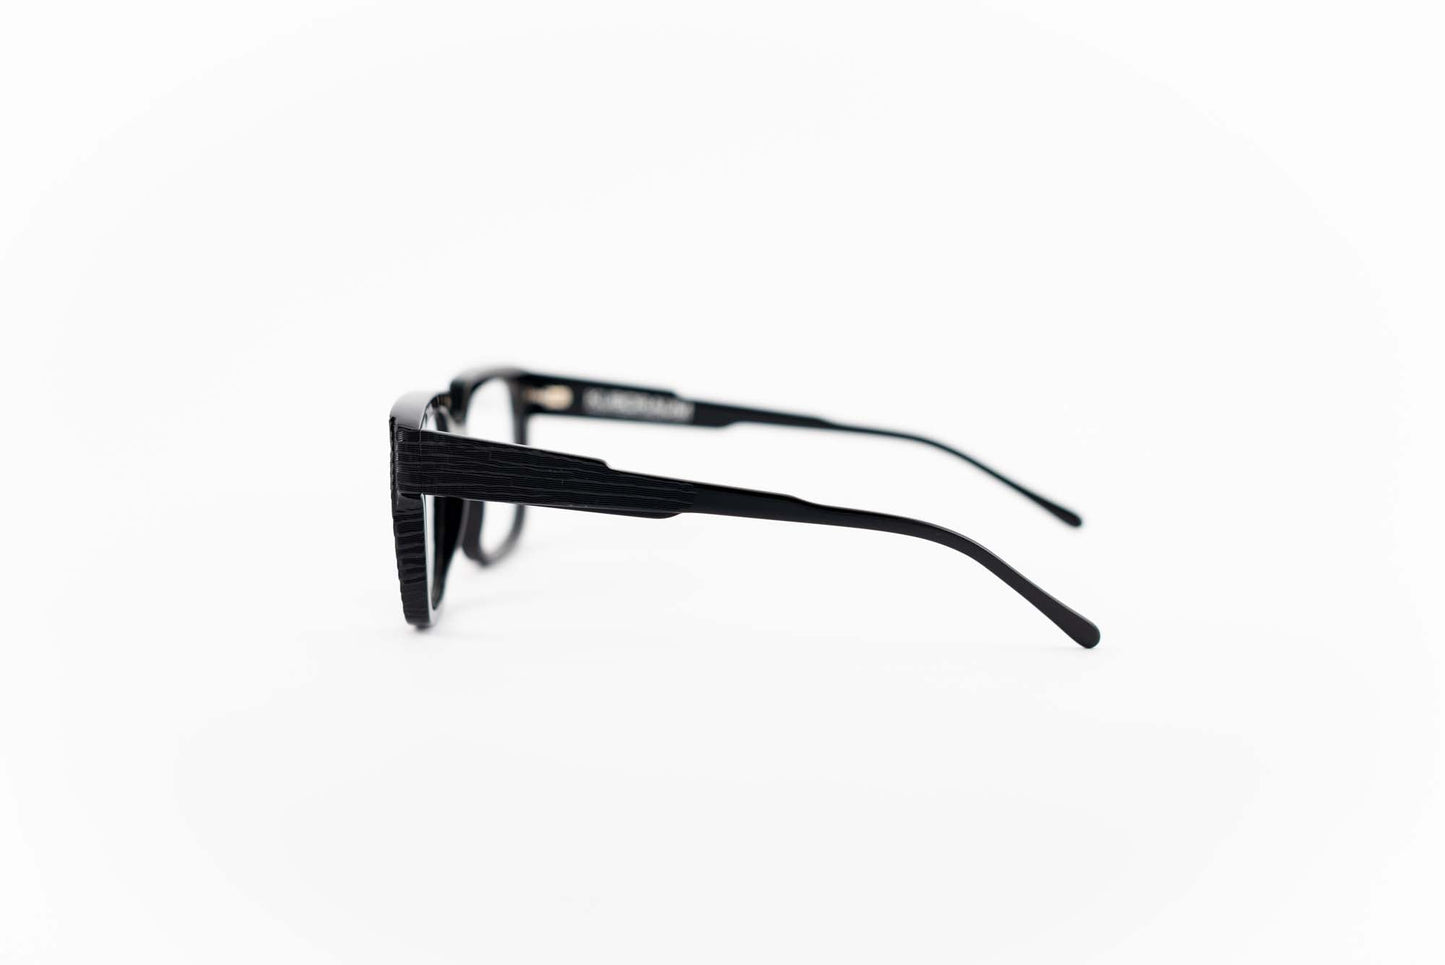 Kuboraum Occhiali da vista Nero / Acetato / Squadrato Kuboraum Maske K3 BS NT: occhiale in acetato nero squadrato da vista